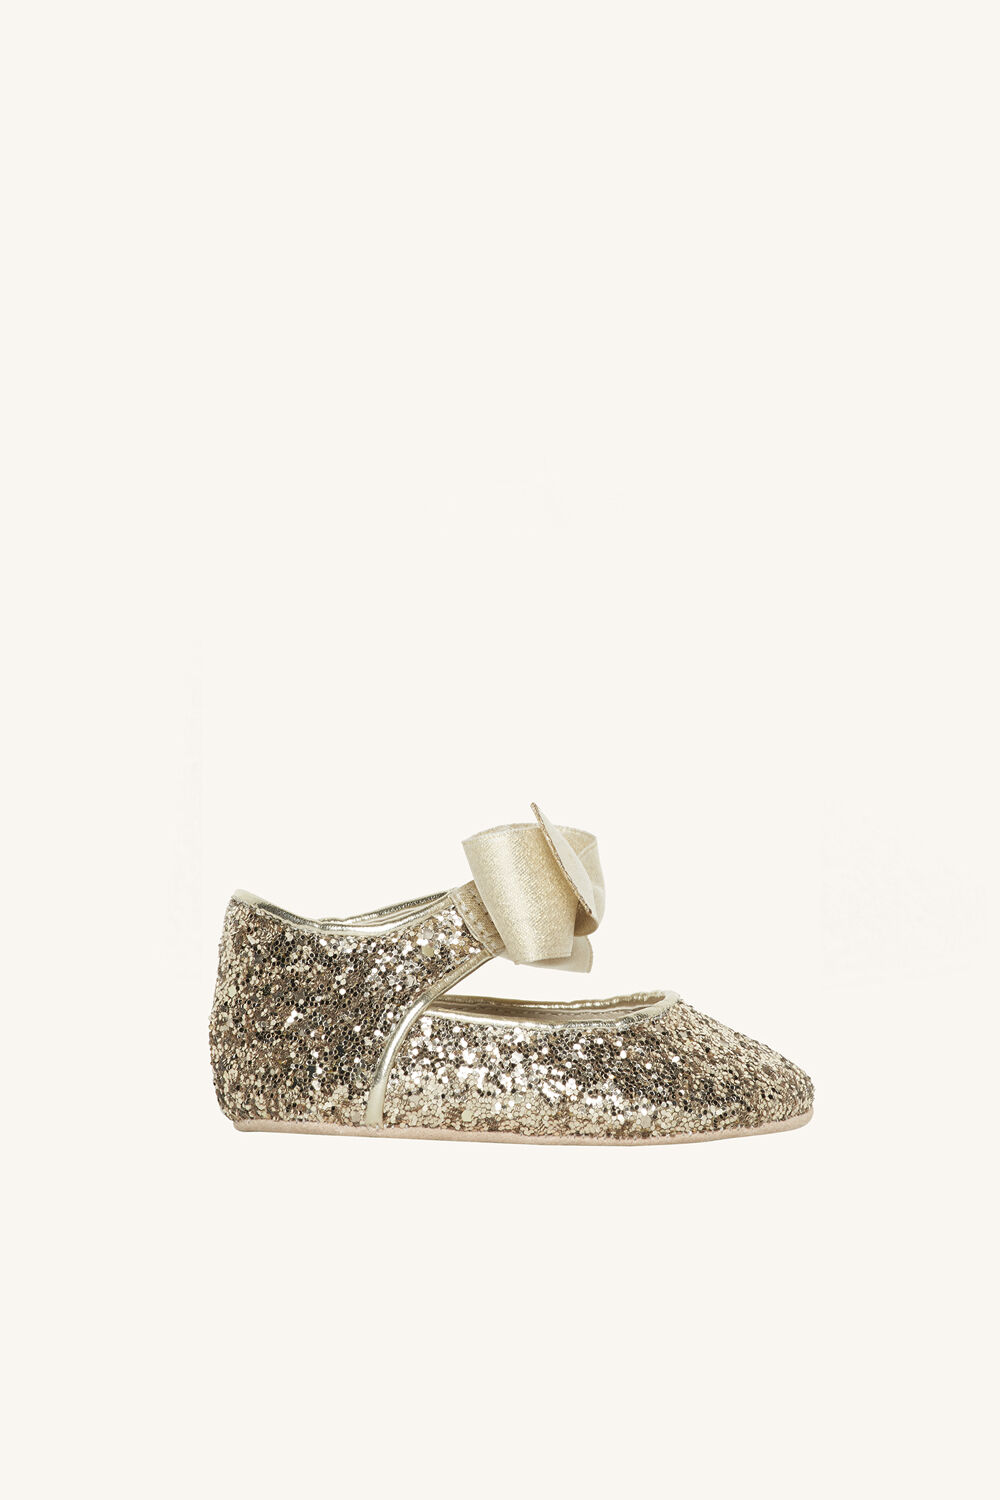 gold glitter infant shoes